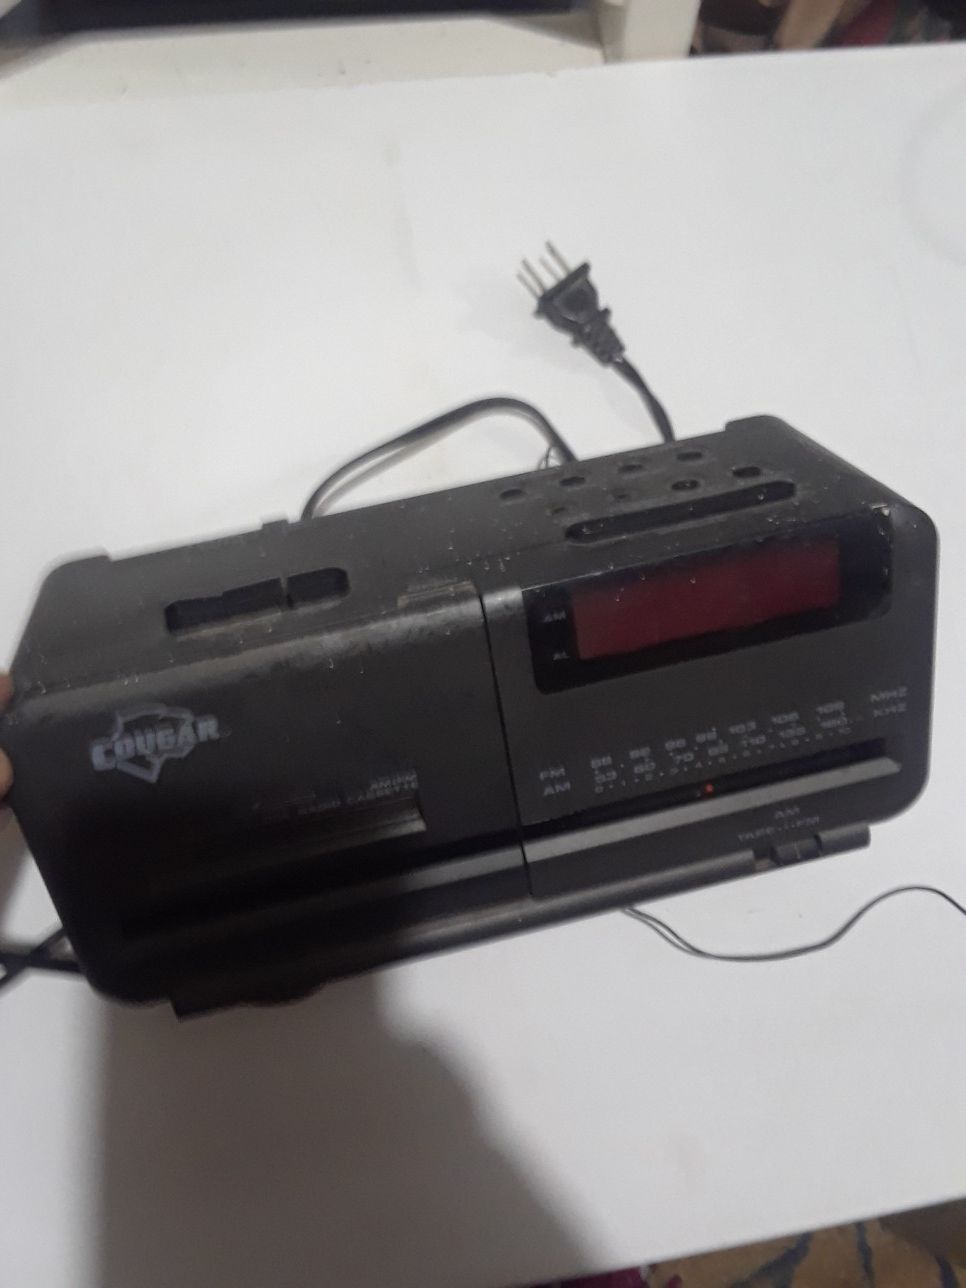 1 COUGAR 🐆Alarm Clock⏰ Radio🎶🎵 with Tape in, am-fm radio 🎶🎼🎵alarm clock⏰ $25.00 cash only